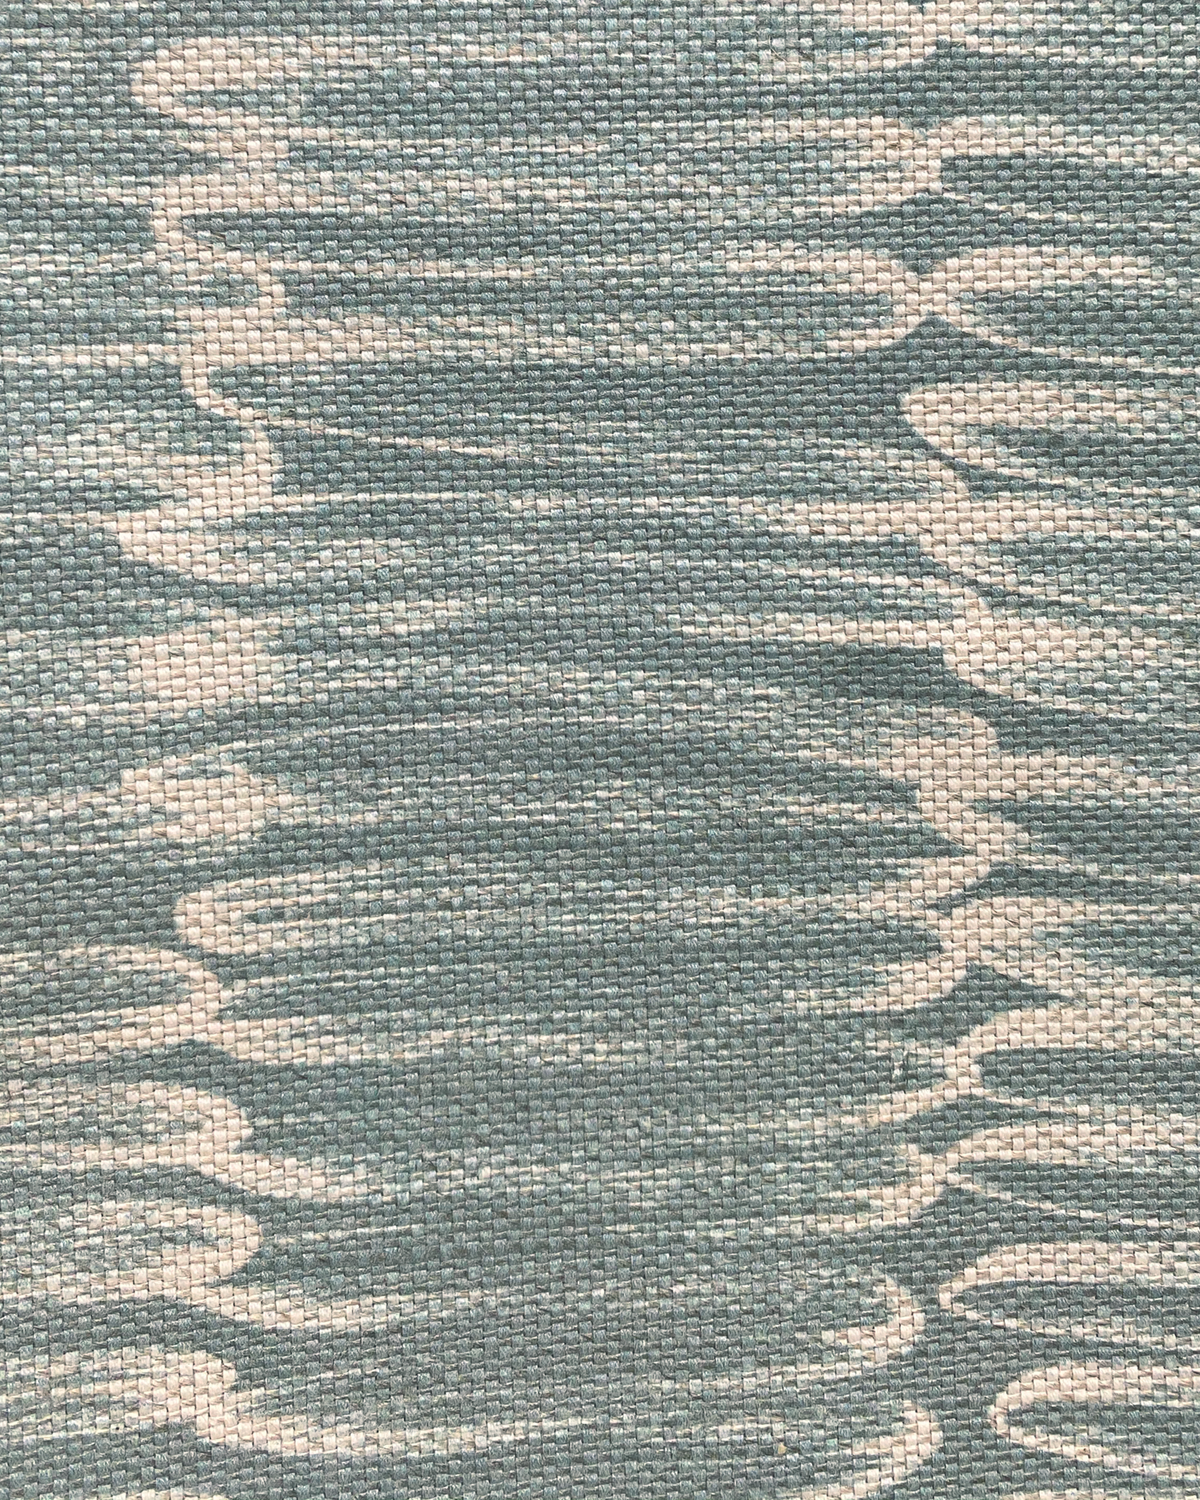 Scribble Fabric in Eucalyptus